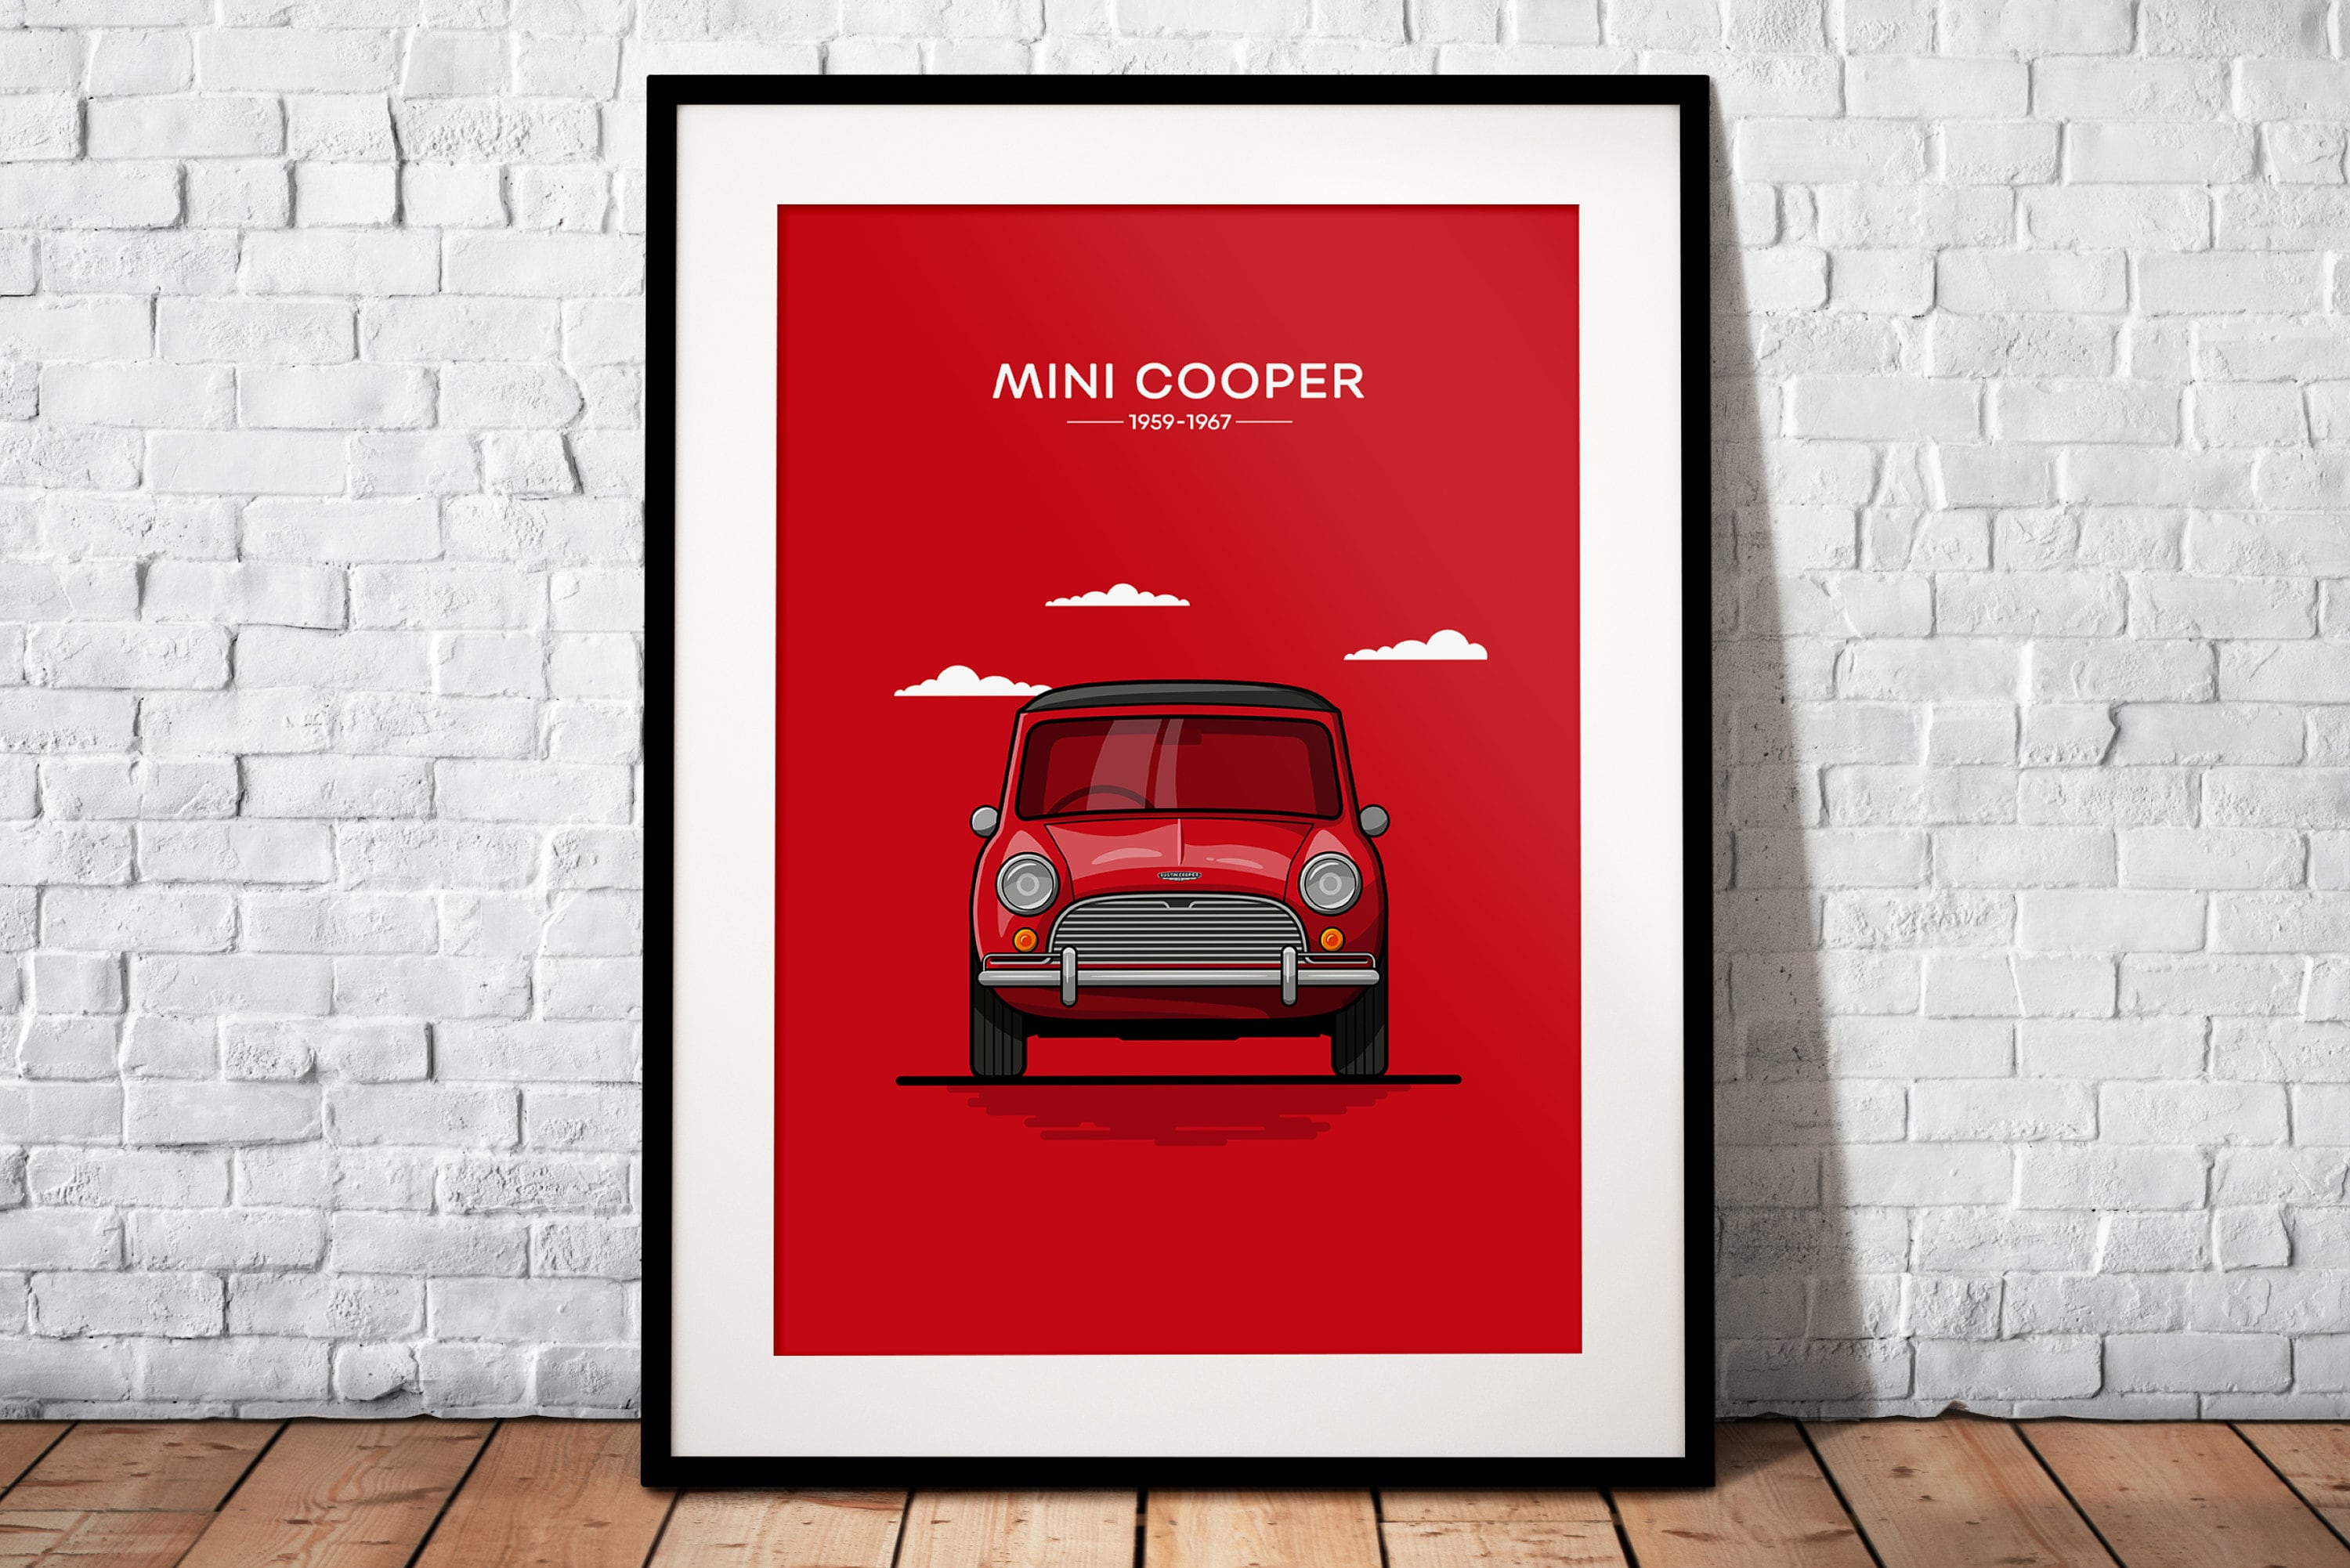 Mini cooper garage - .de